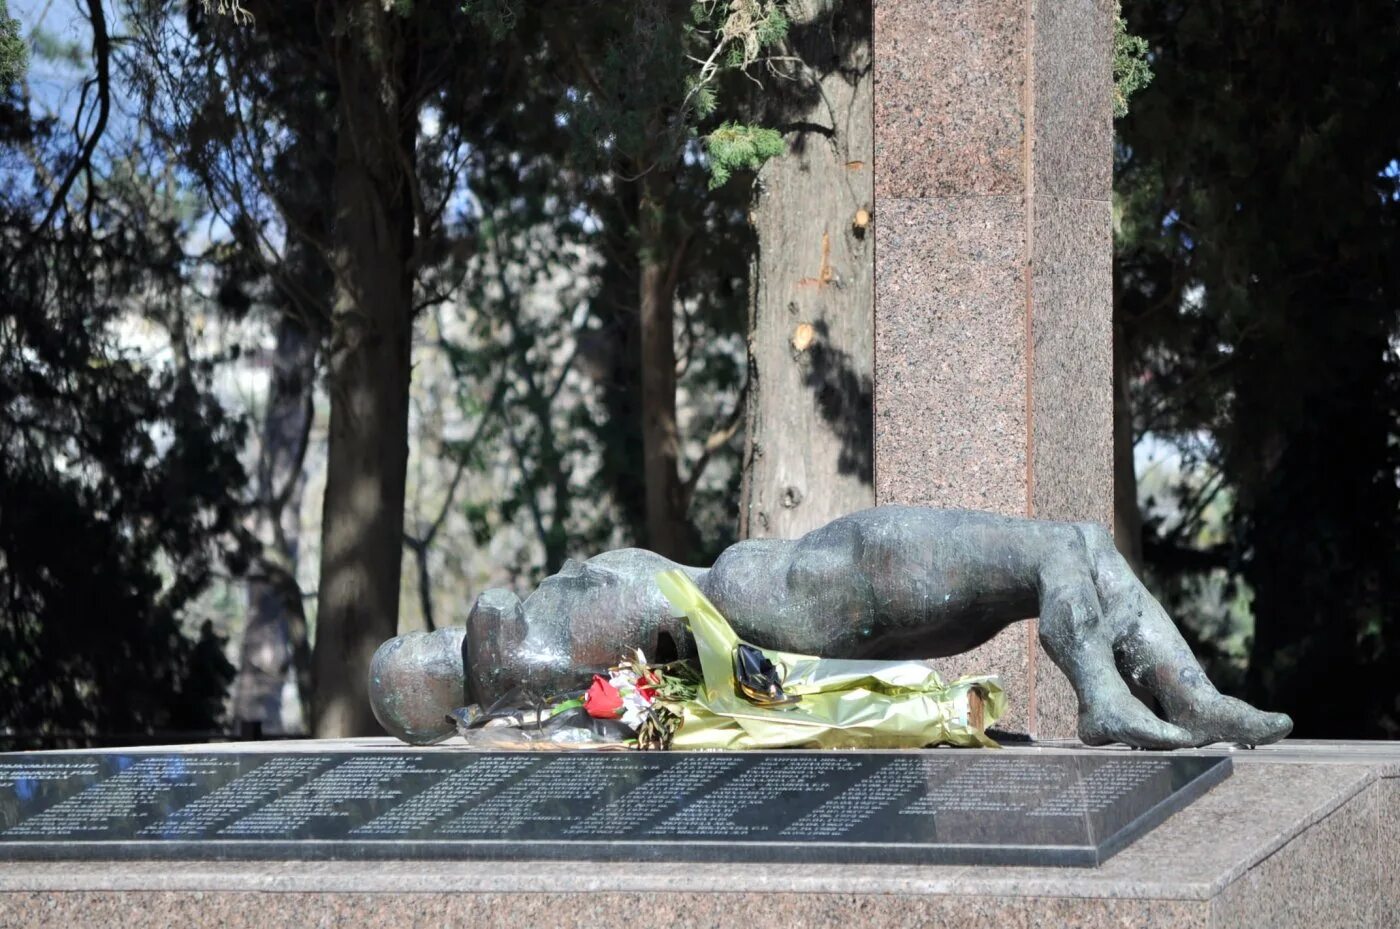 5 октября 1992 год. Латская трагедия Абхазия 1992-1993 год. Латская трагедия 1992 памятник. Латская трагедия 1992 в Абхазии.